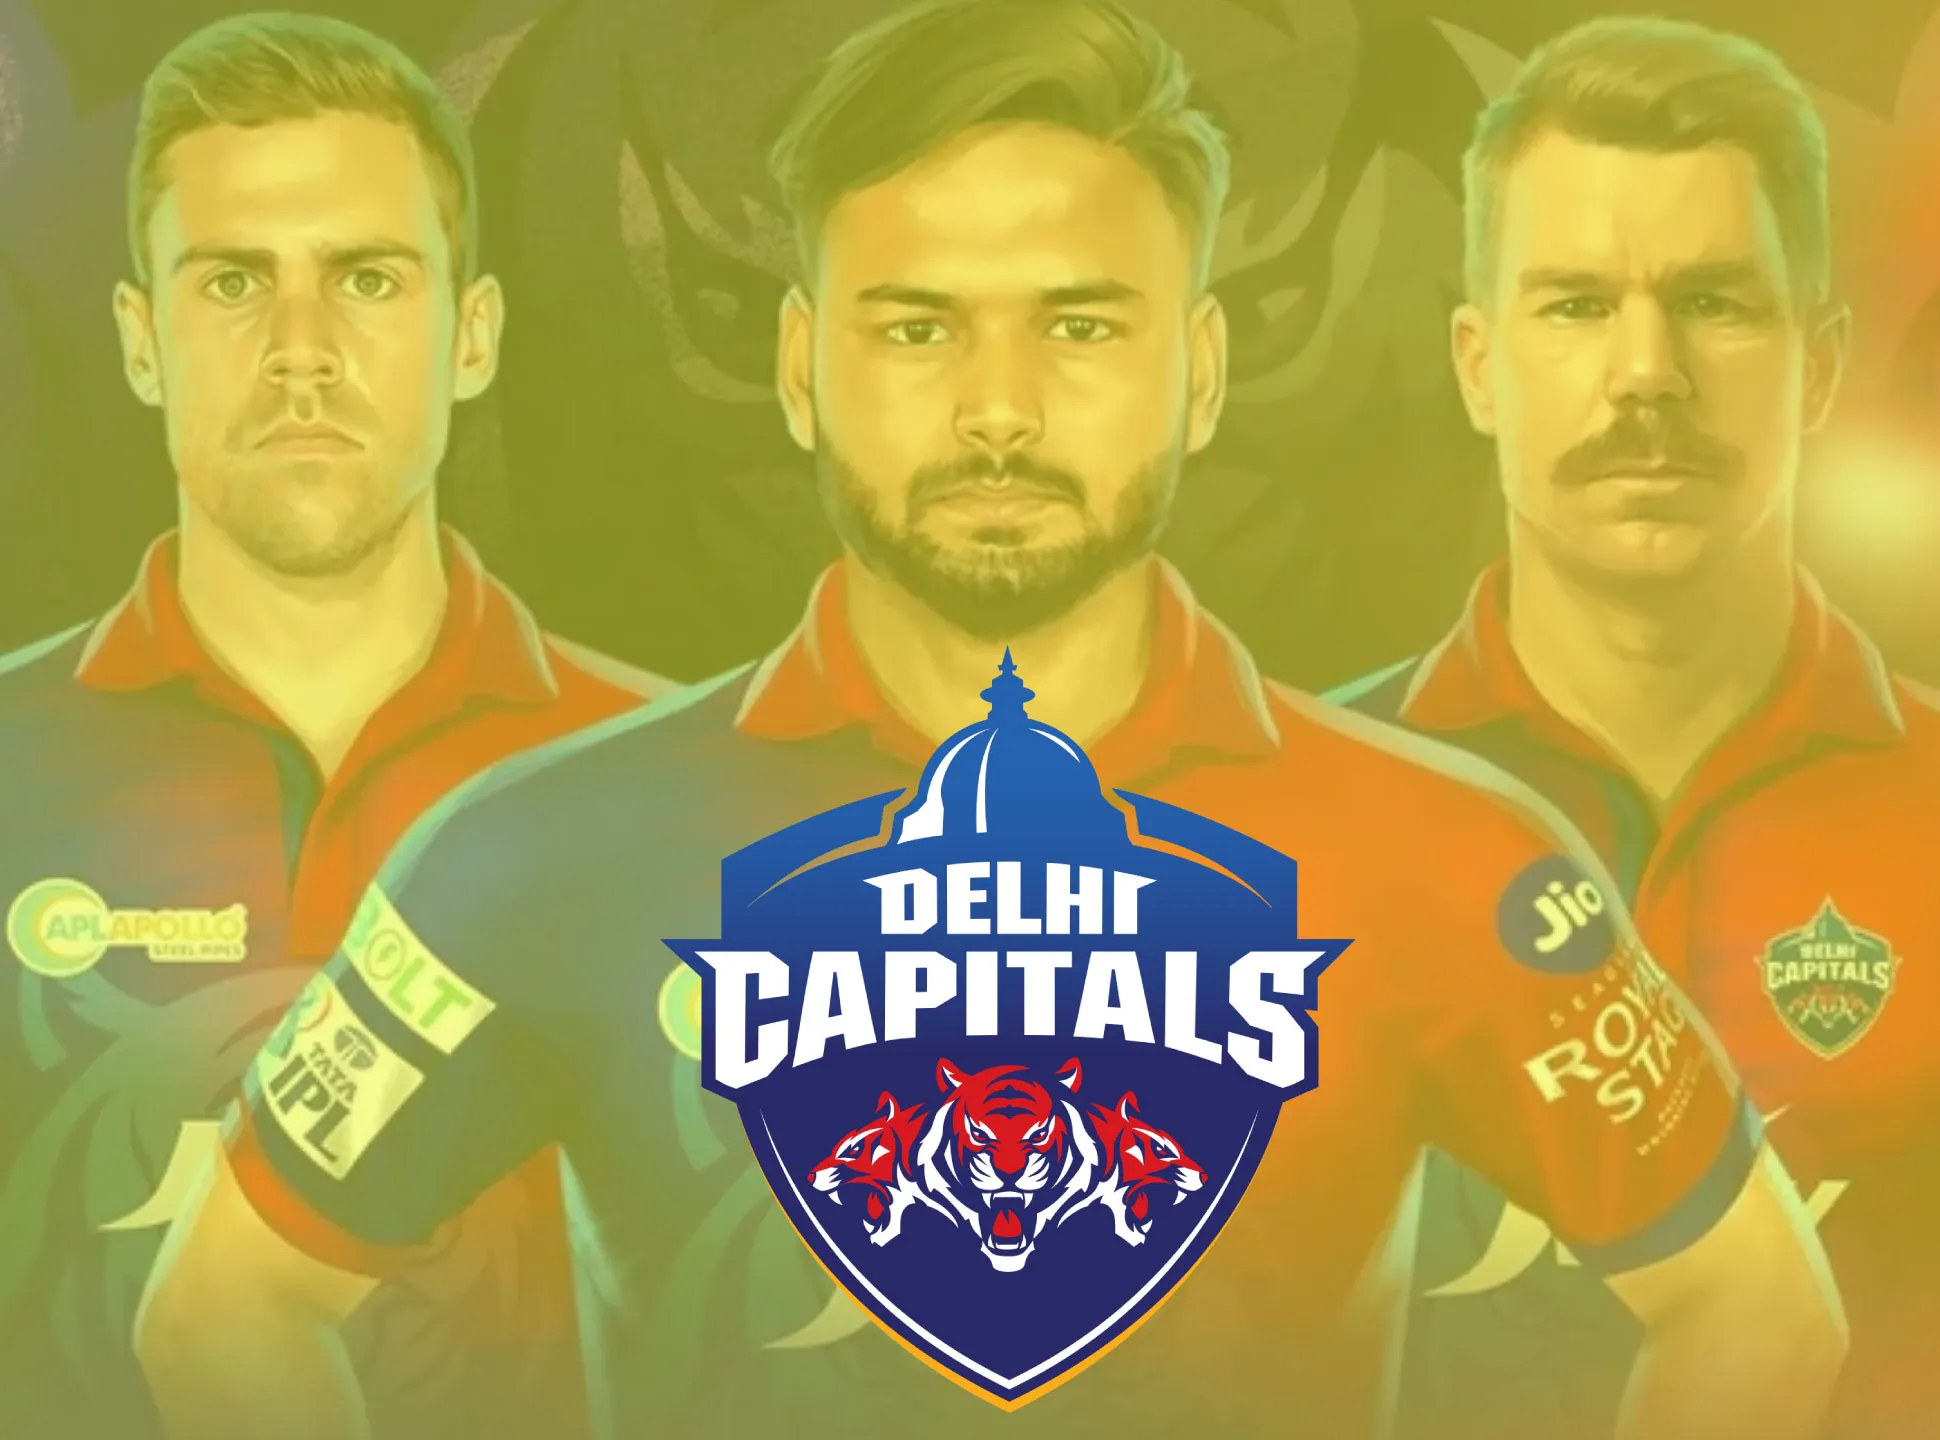 Delhi Capitals take part in IPL since 2008.